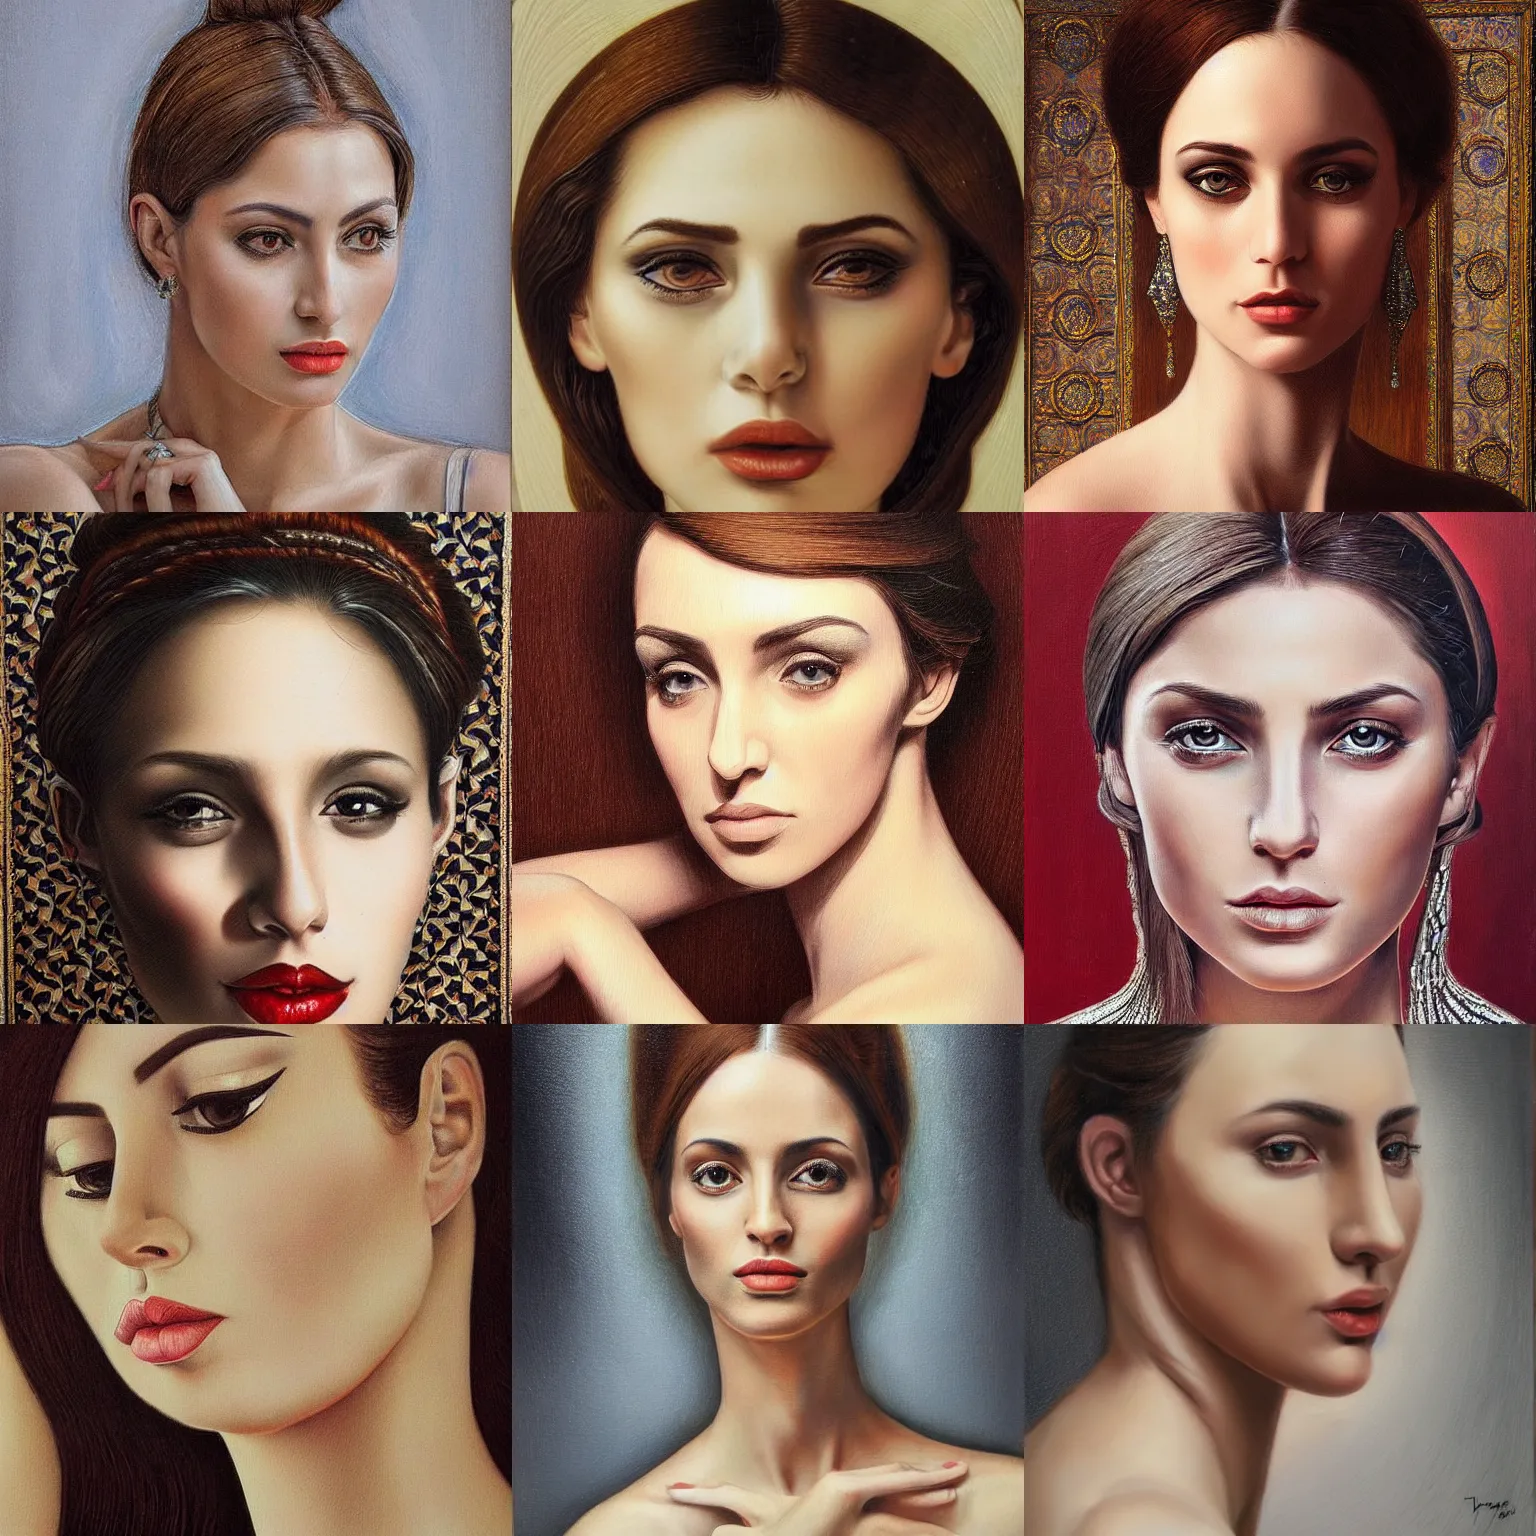 Prompt: portrait of an elegant woman by enis yavuz, hyper realism, intricate detail, symmetric face